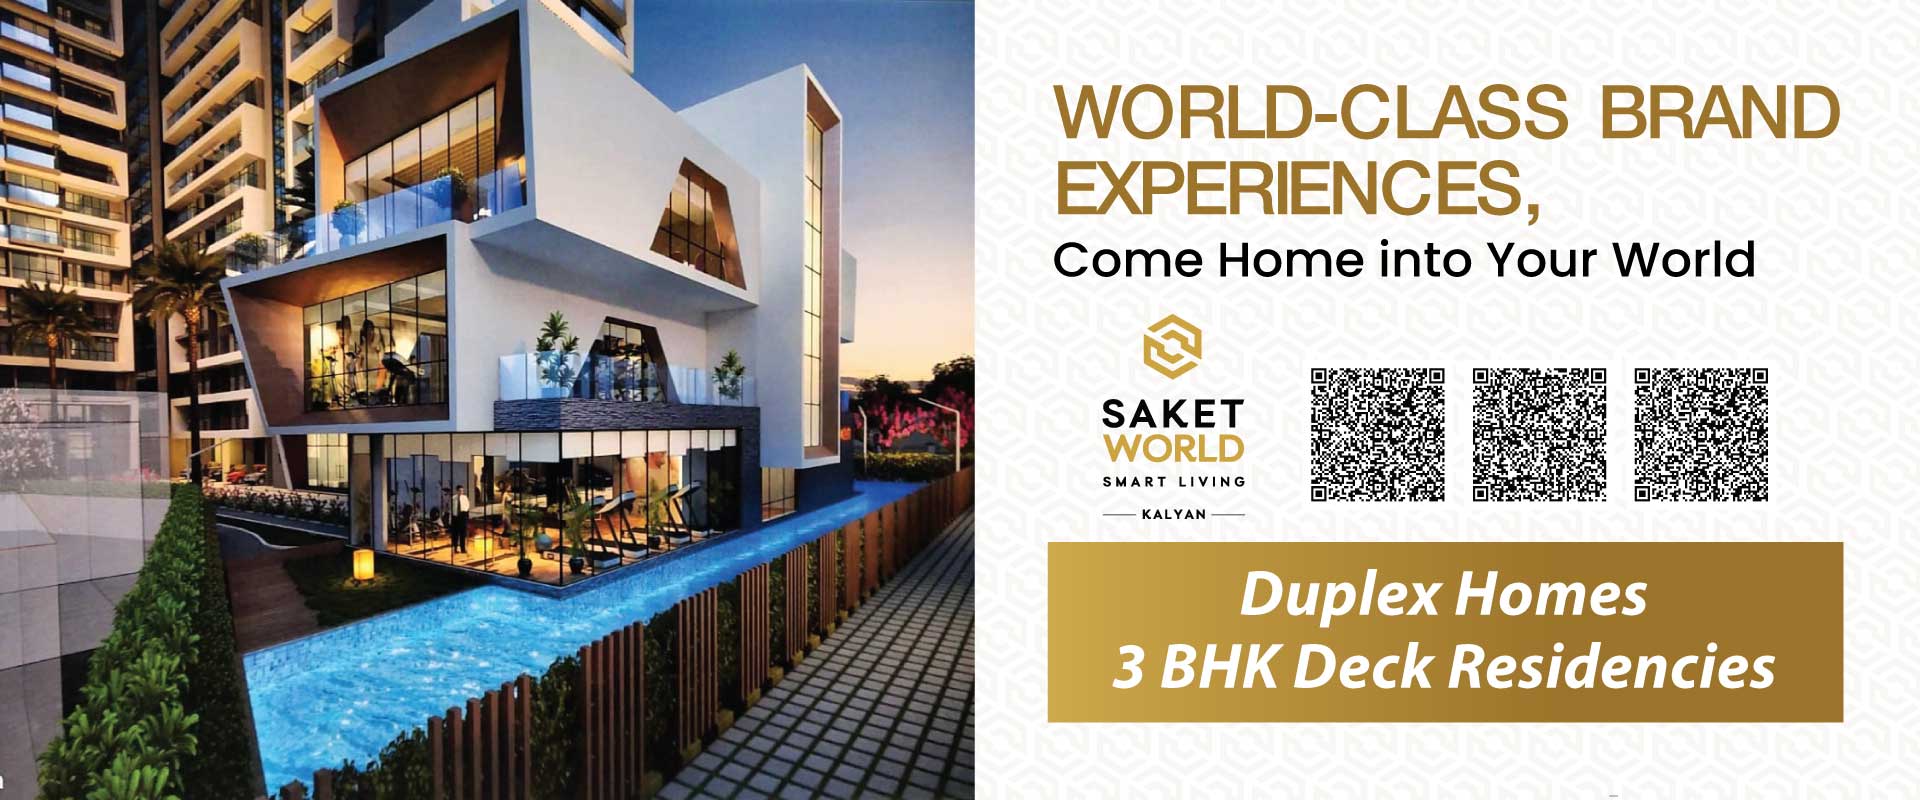 Saket World Duplex House | Sakte World Flat Price